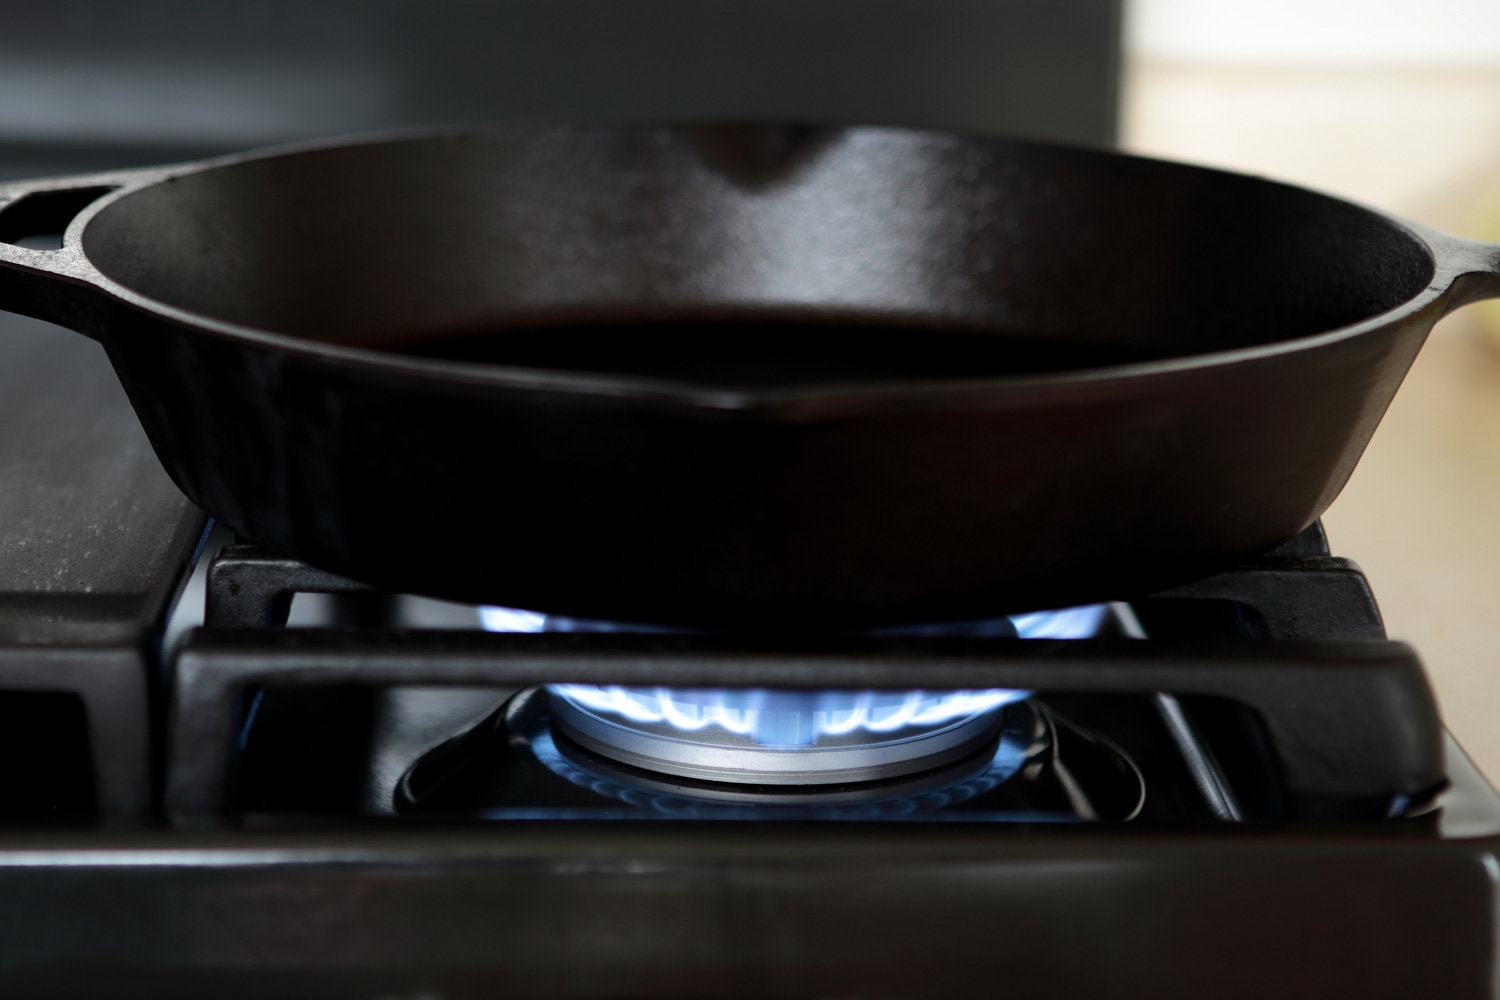 Cast iron pan heating up on gas range stove.